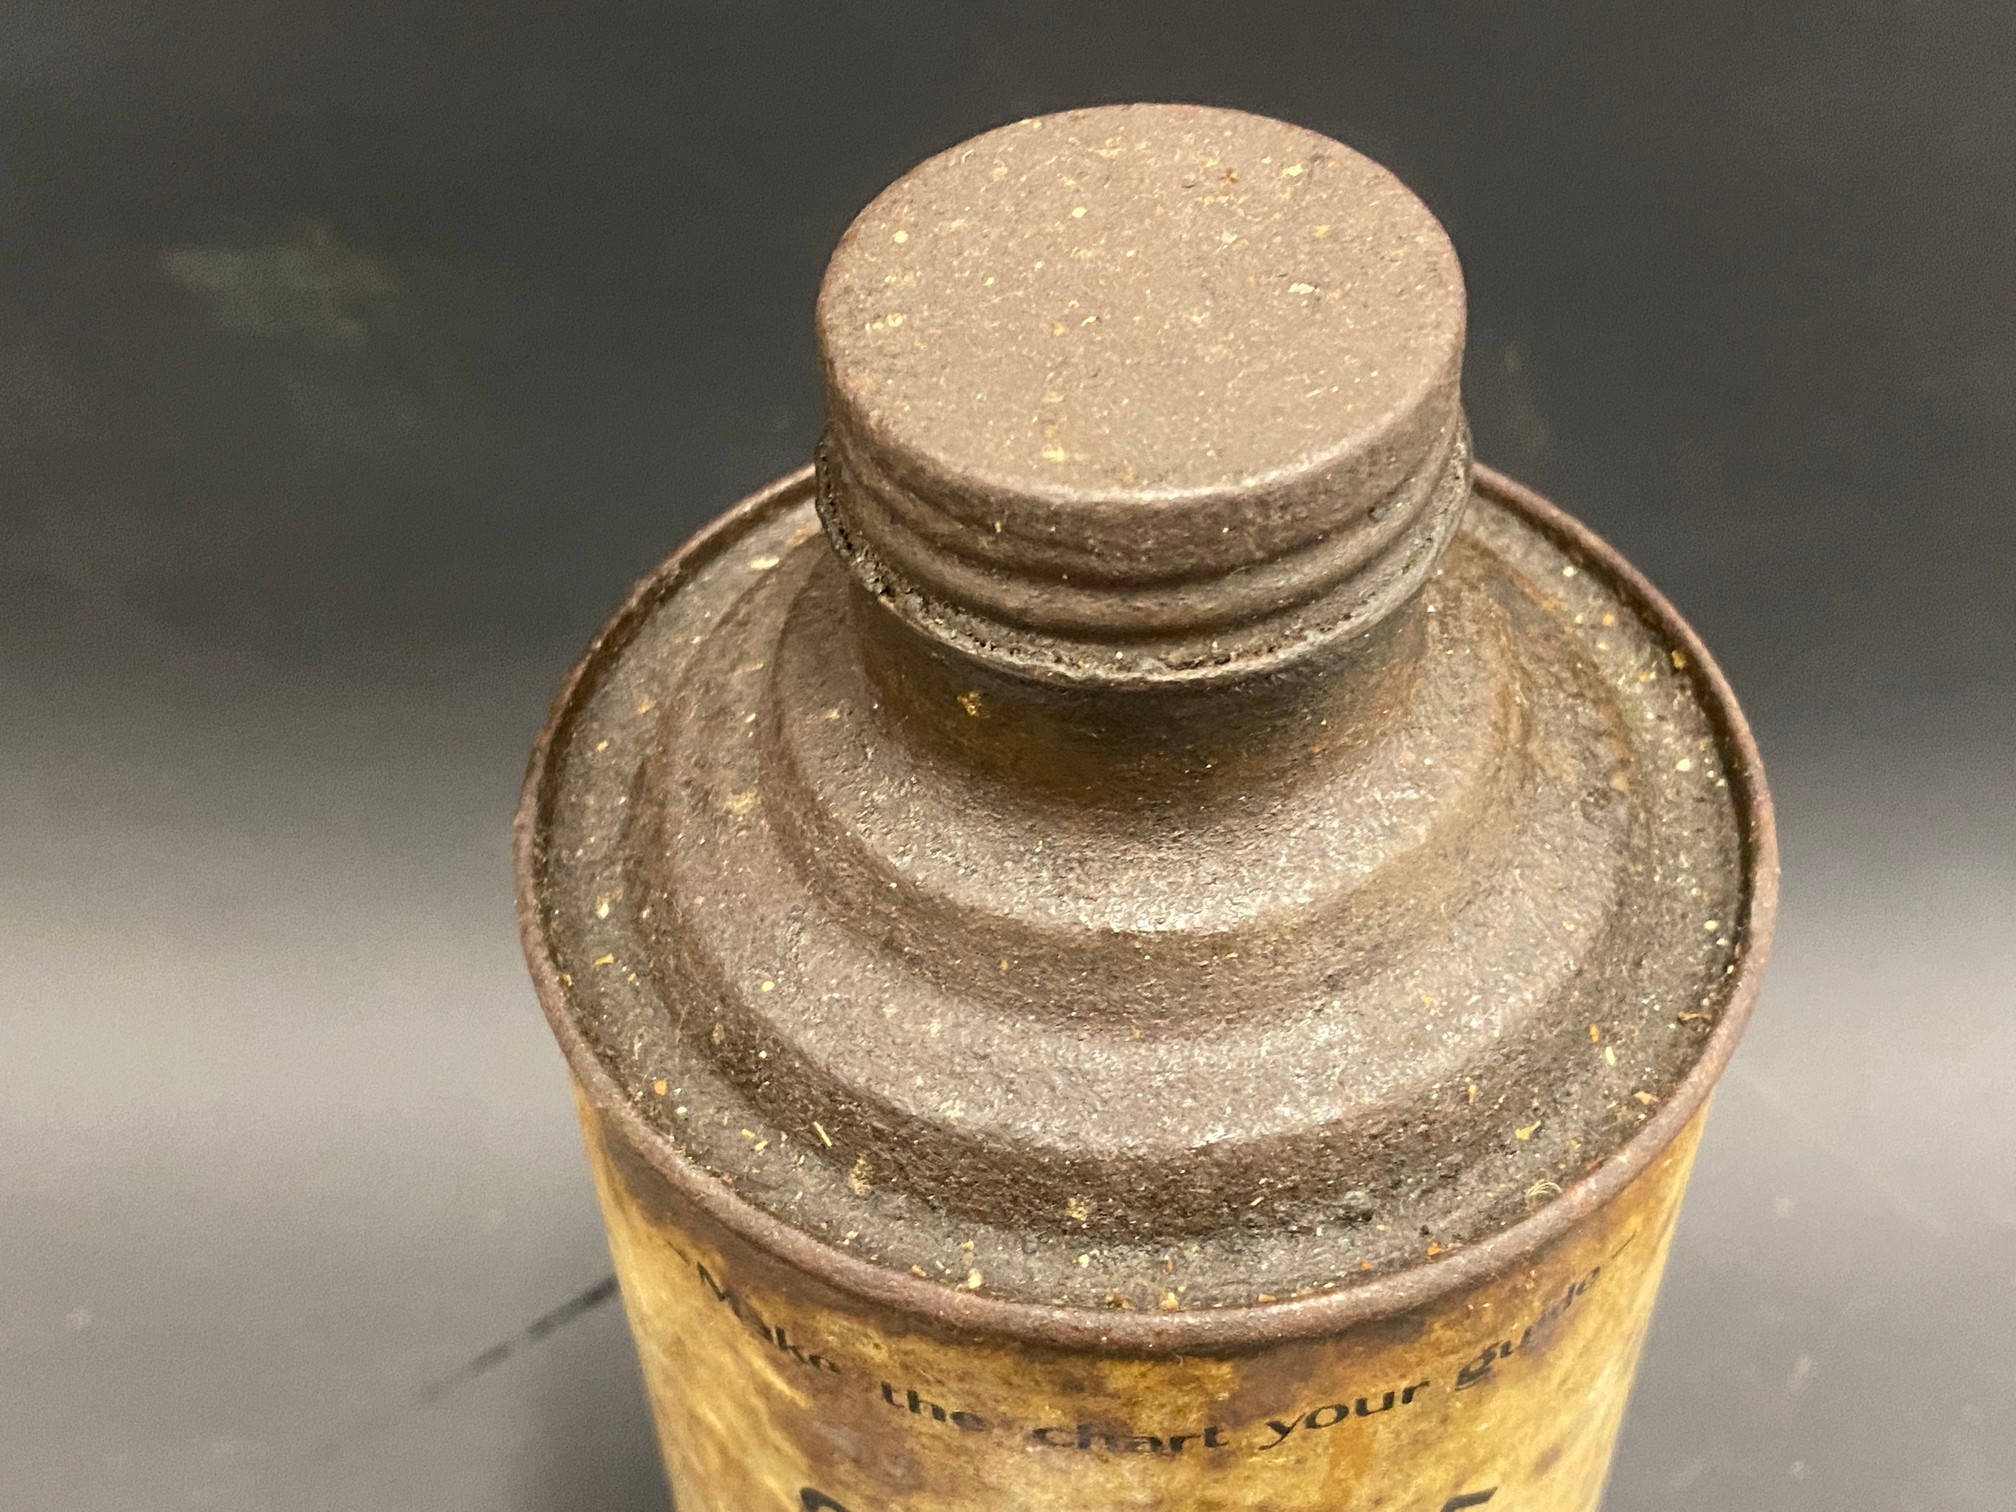 A Gargoyle Mobiloil 'E' Grade for Ford Cars quart cylindrical oil can. - Image 3 of 4